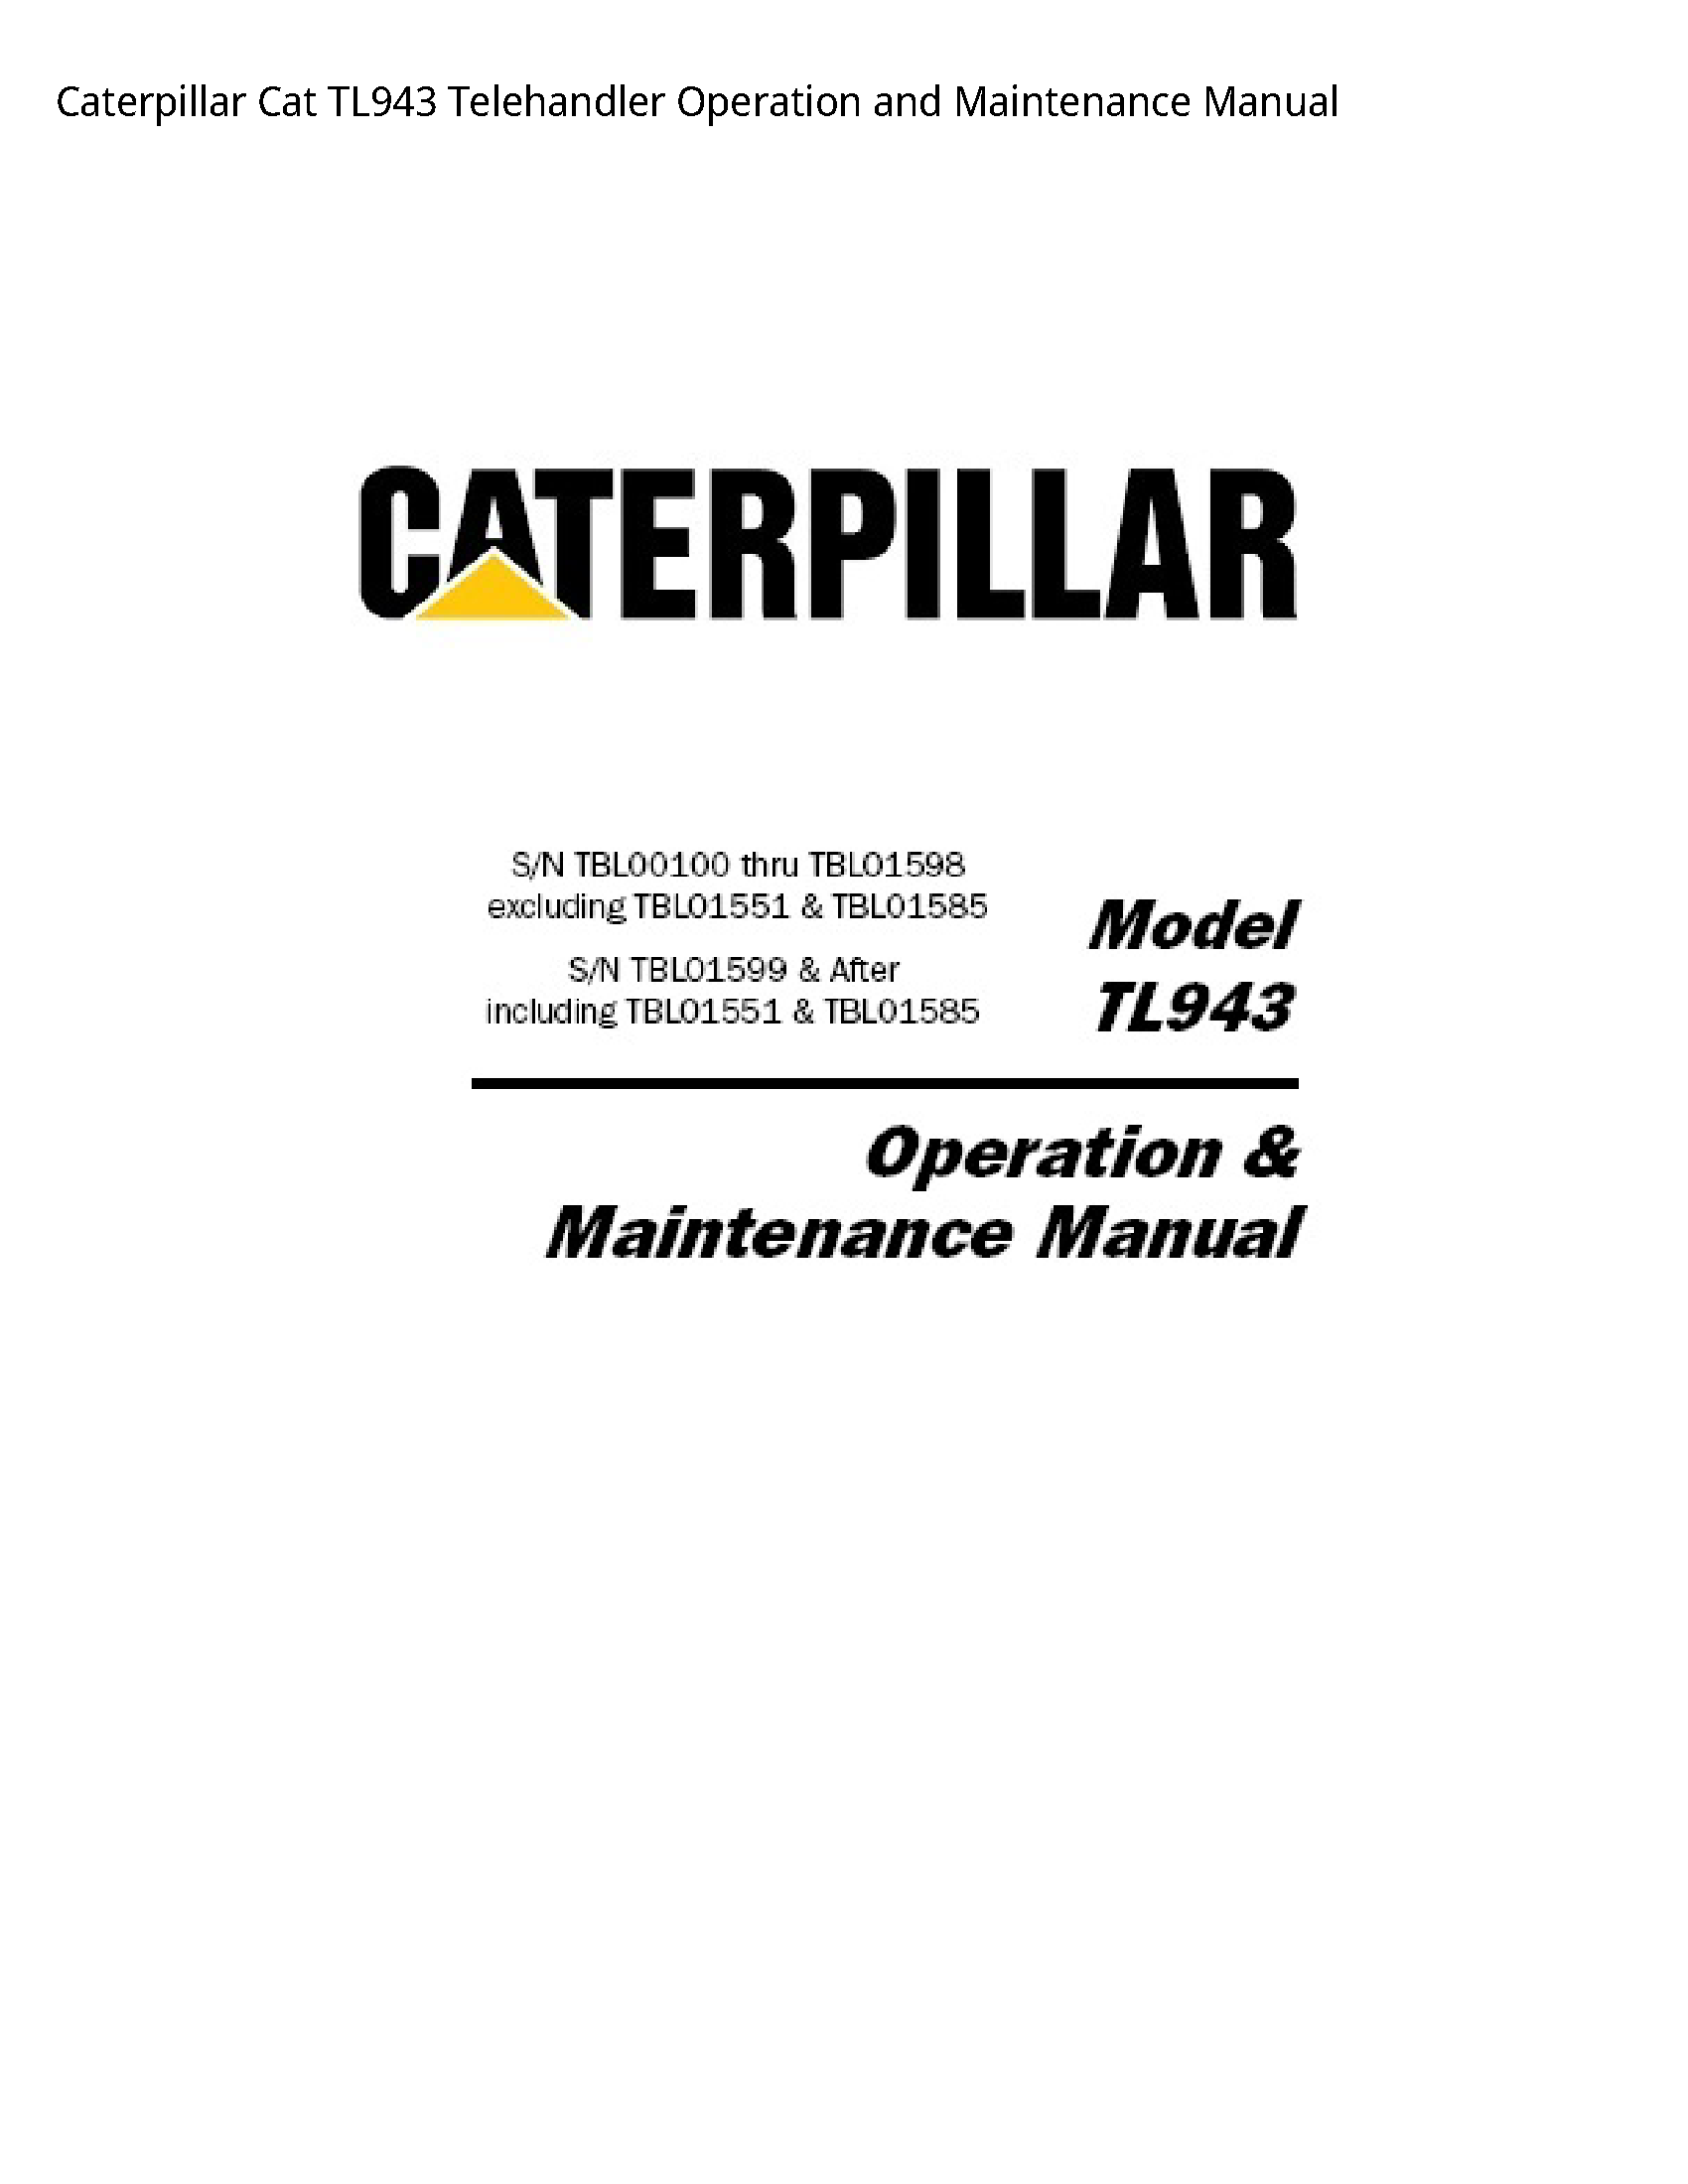 Caterpillar TL943 Cat Telehandler Operation  Maintenance manual